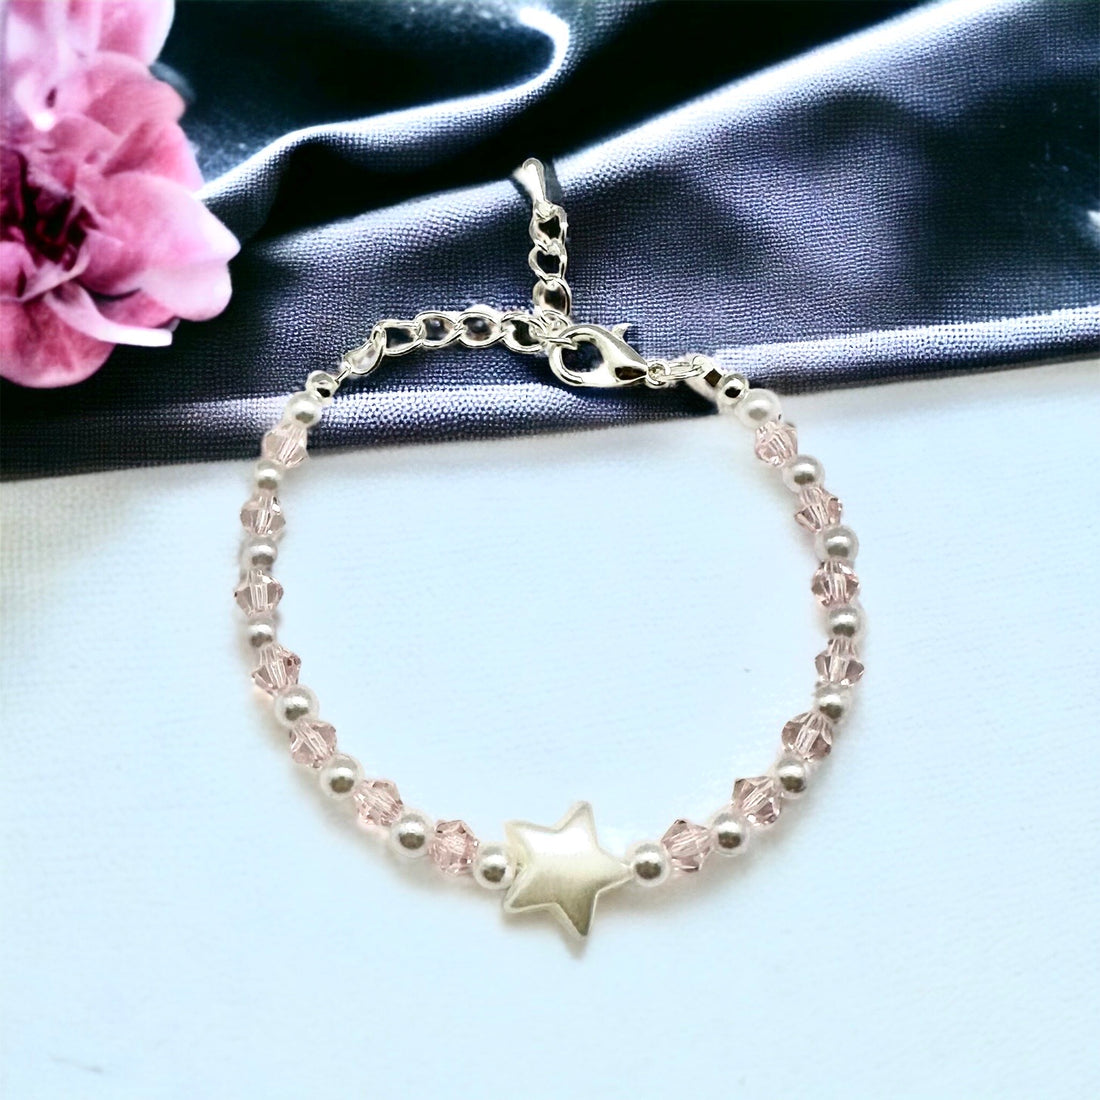 White Star Charm Black + Pink Beads